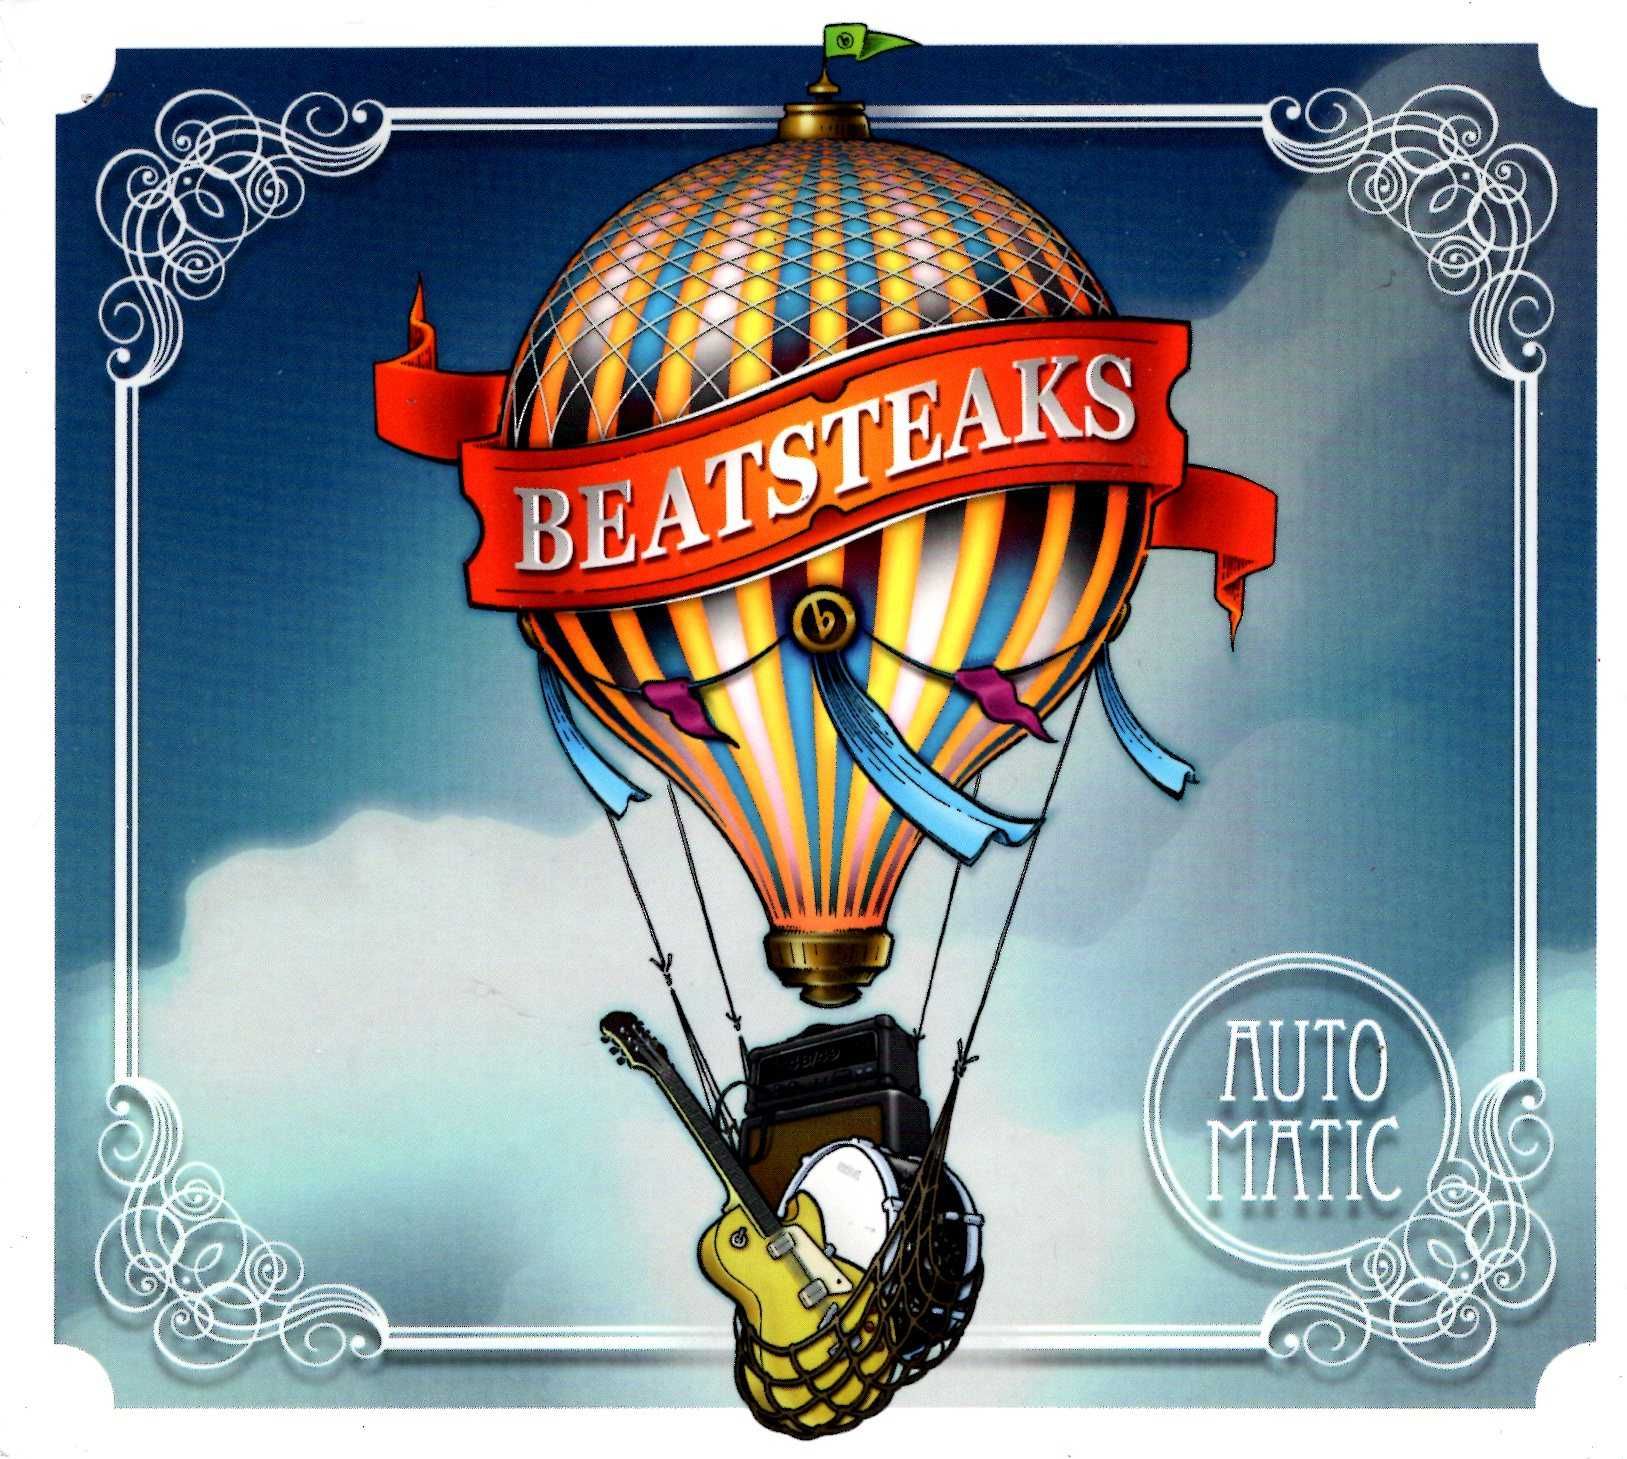 Beatsteaks - Automatic (CD)